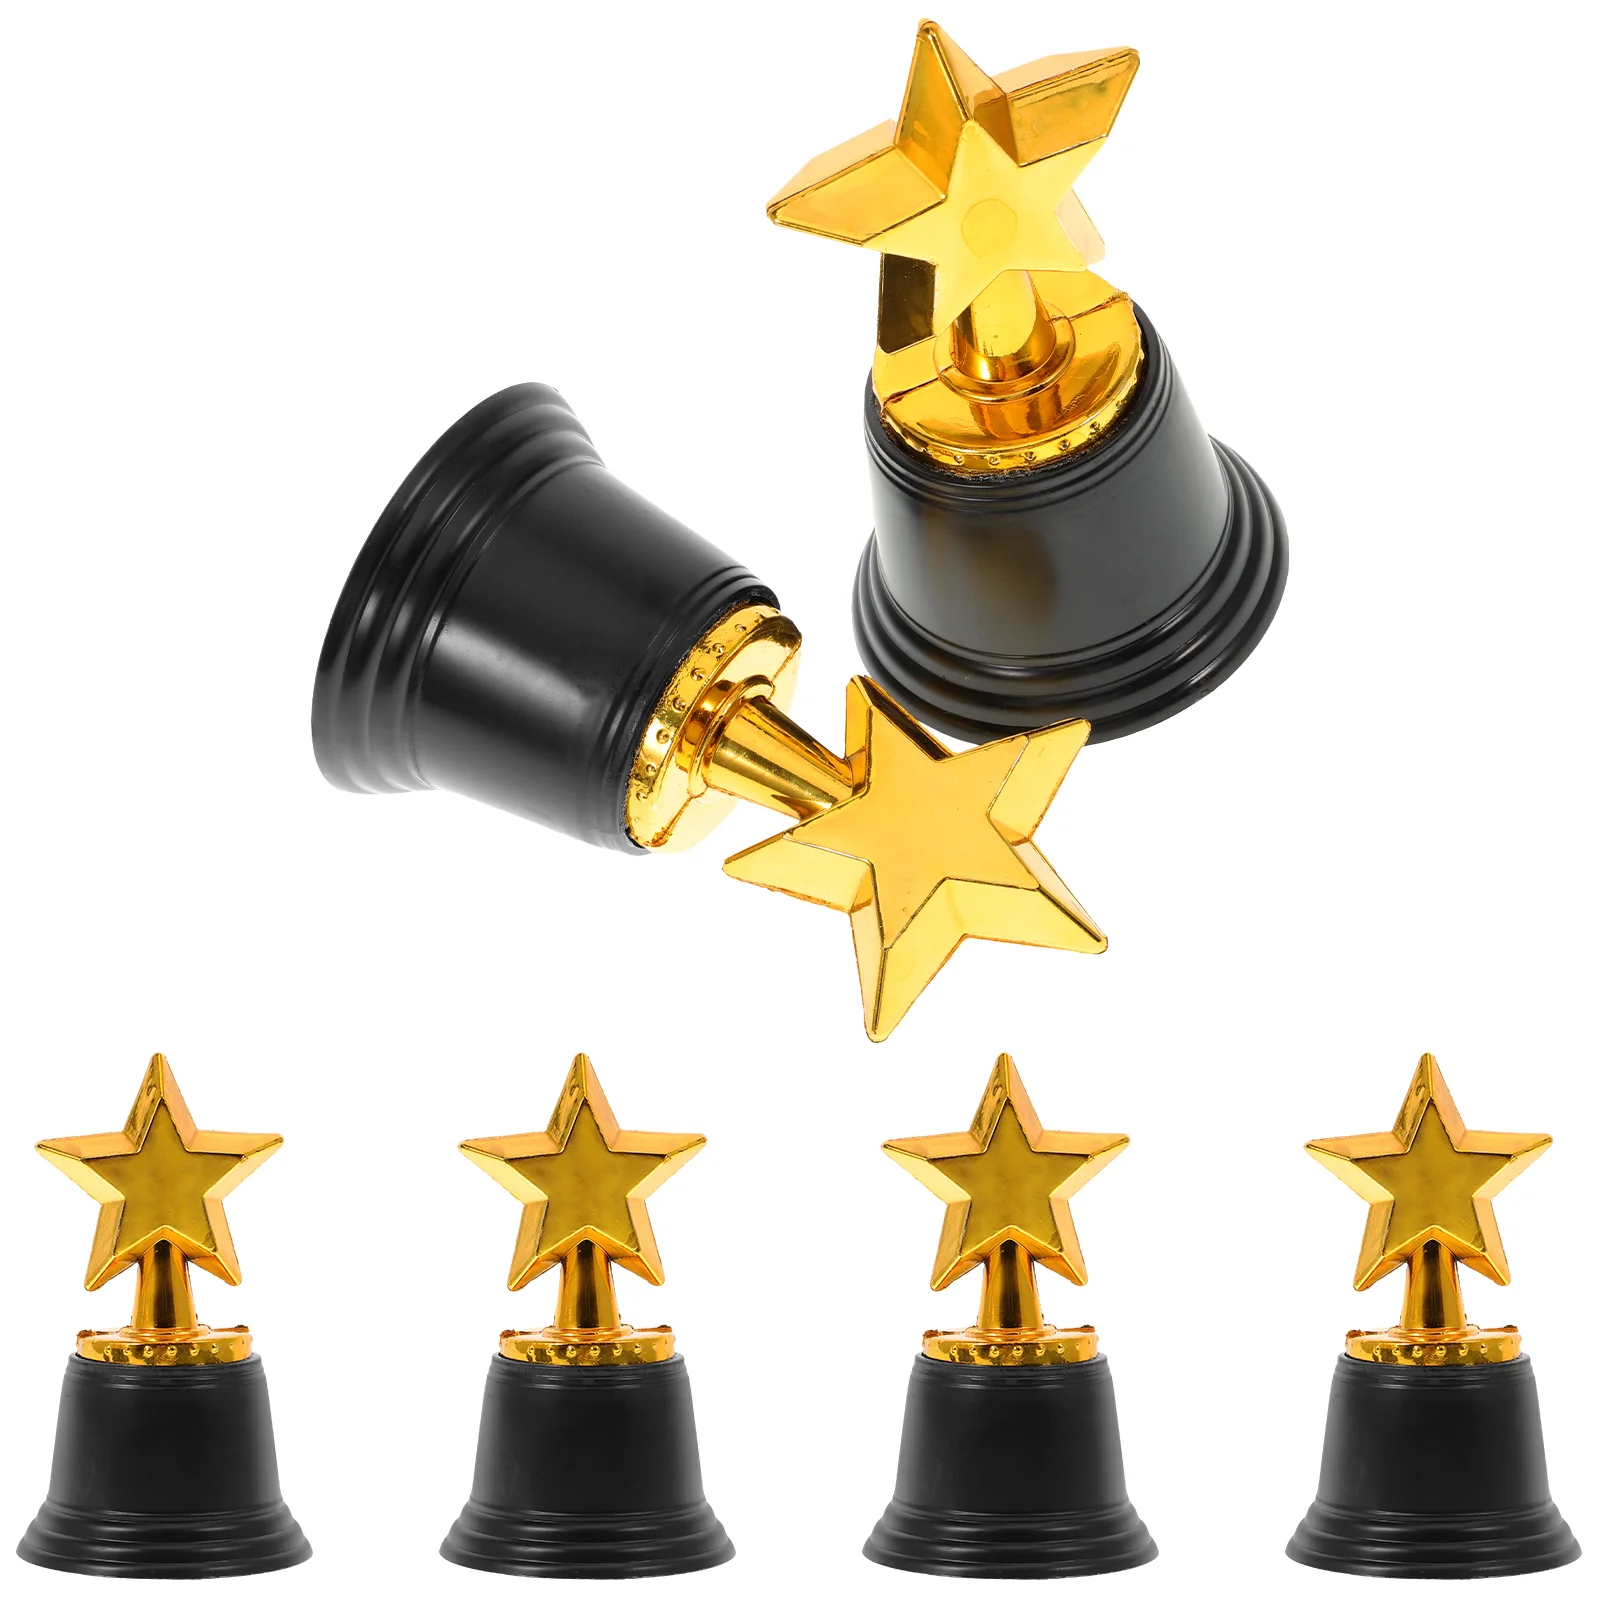 

6pcs Golden Award Star Trophy Reward Prizes for Party Celebrations Ceremony Appreciation Gift Awards